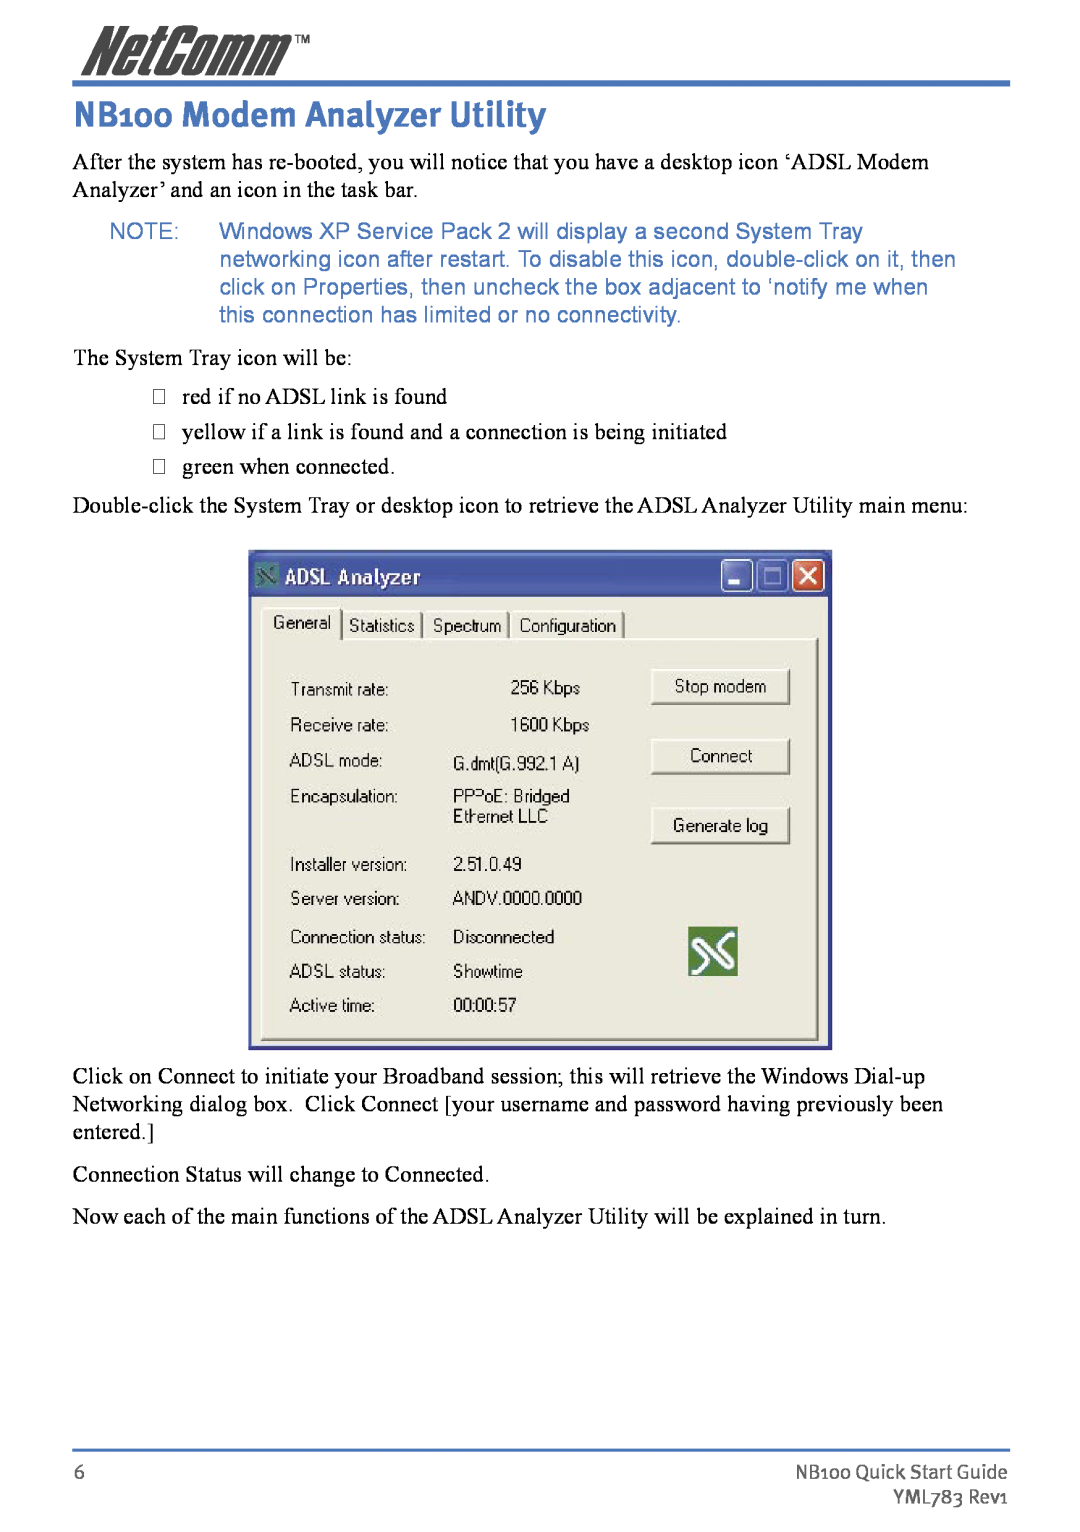 NetComm manual NB100 Modem Analyzer Utility, Windows XP Service Pack 2 will display a second System Tray 